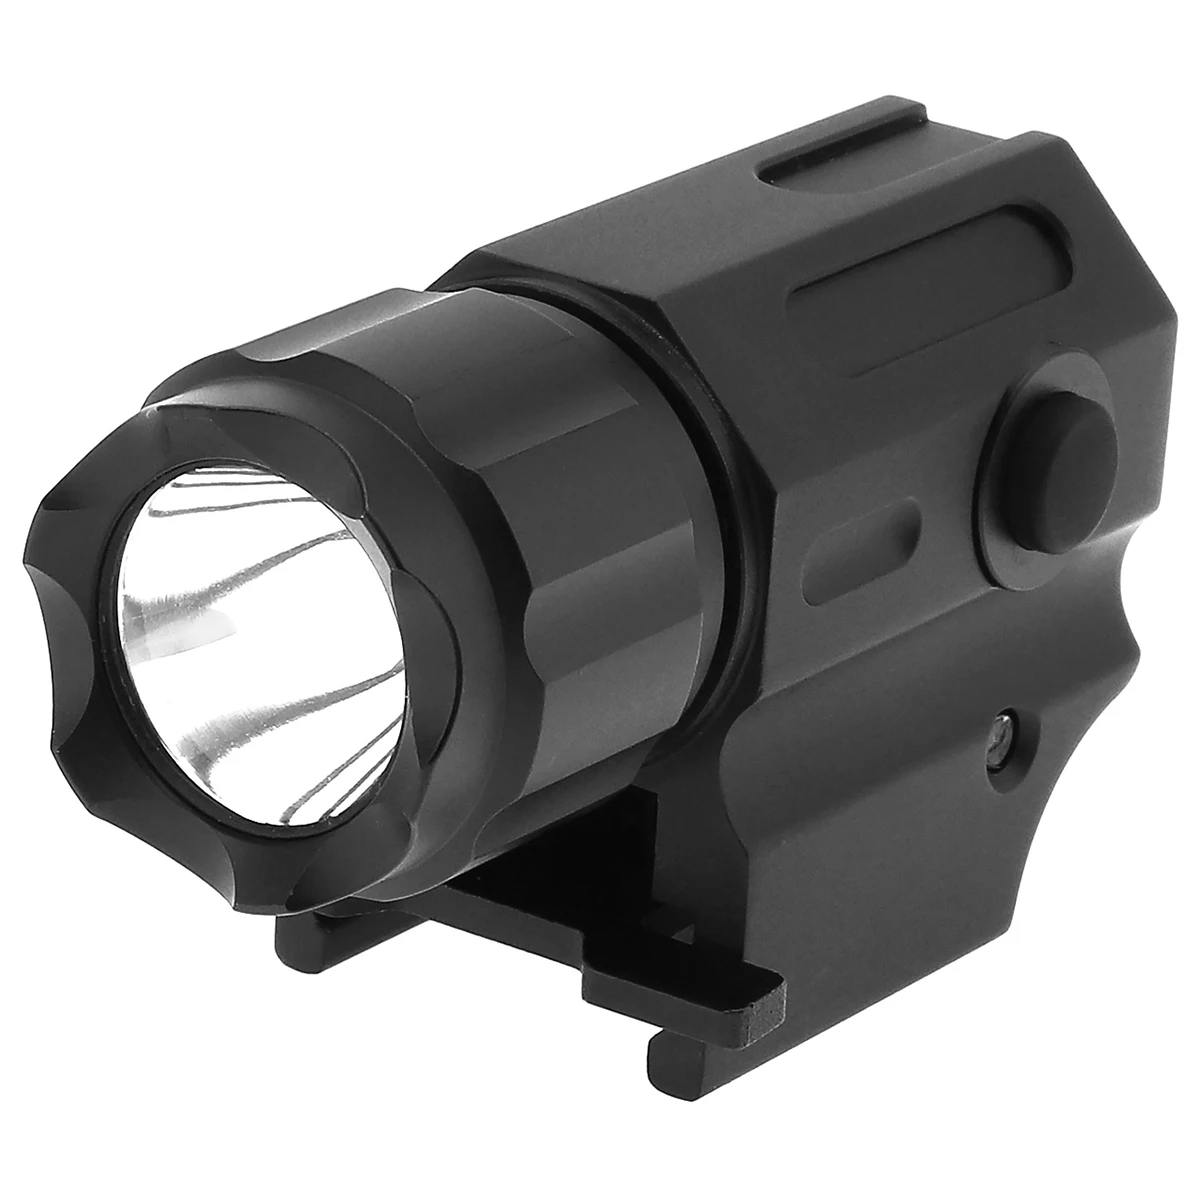 Trustfire Tactical Gun Flashlight Pistol Torch Light 210LM LED 2Mode for Hunting 